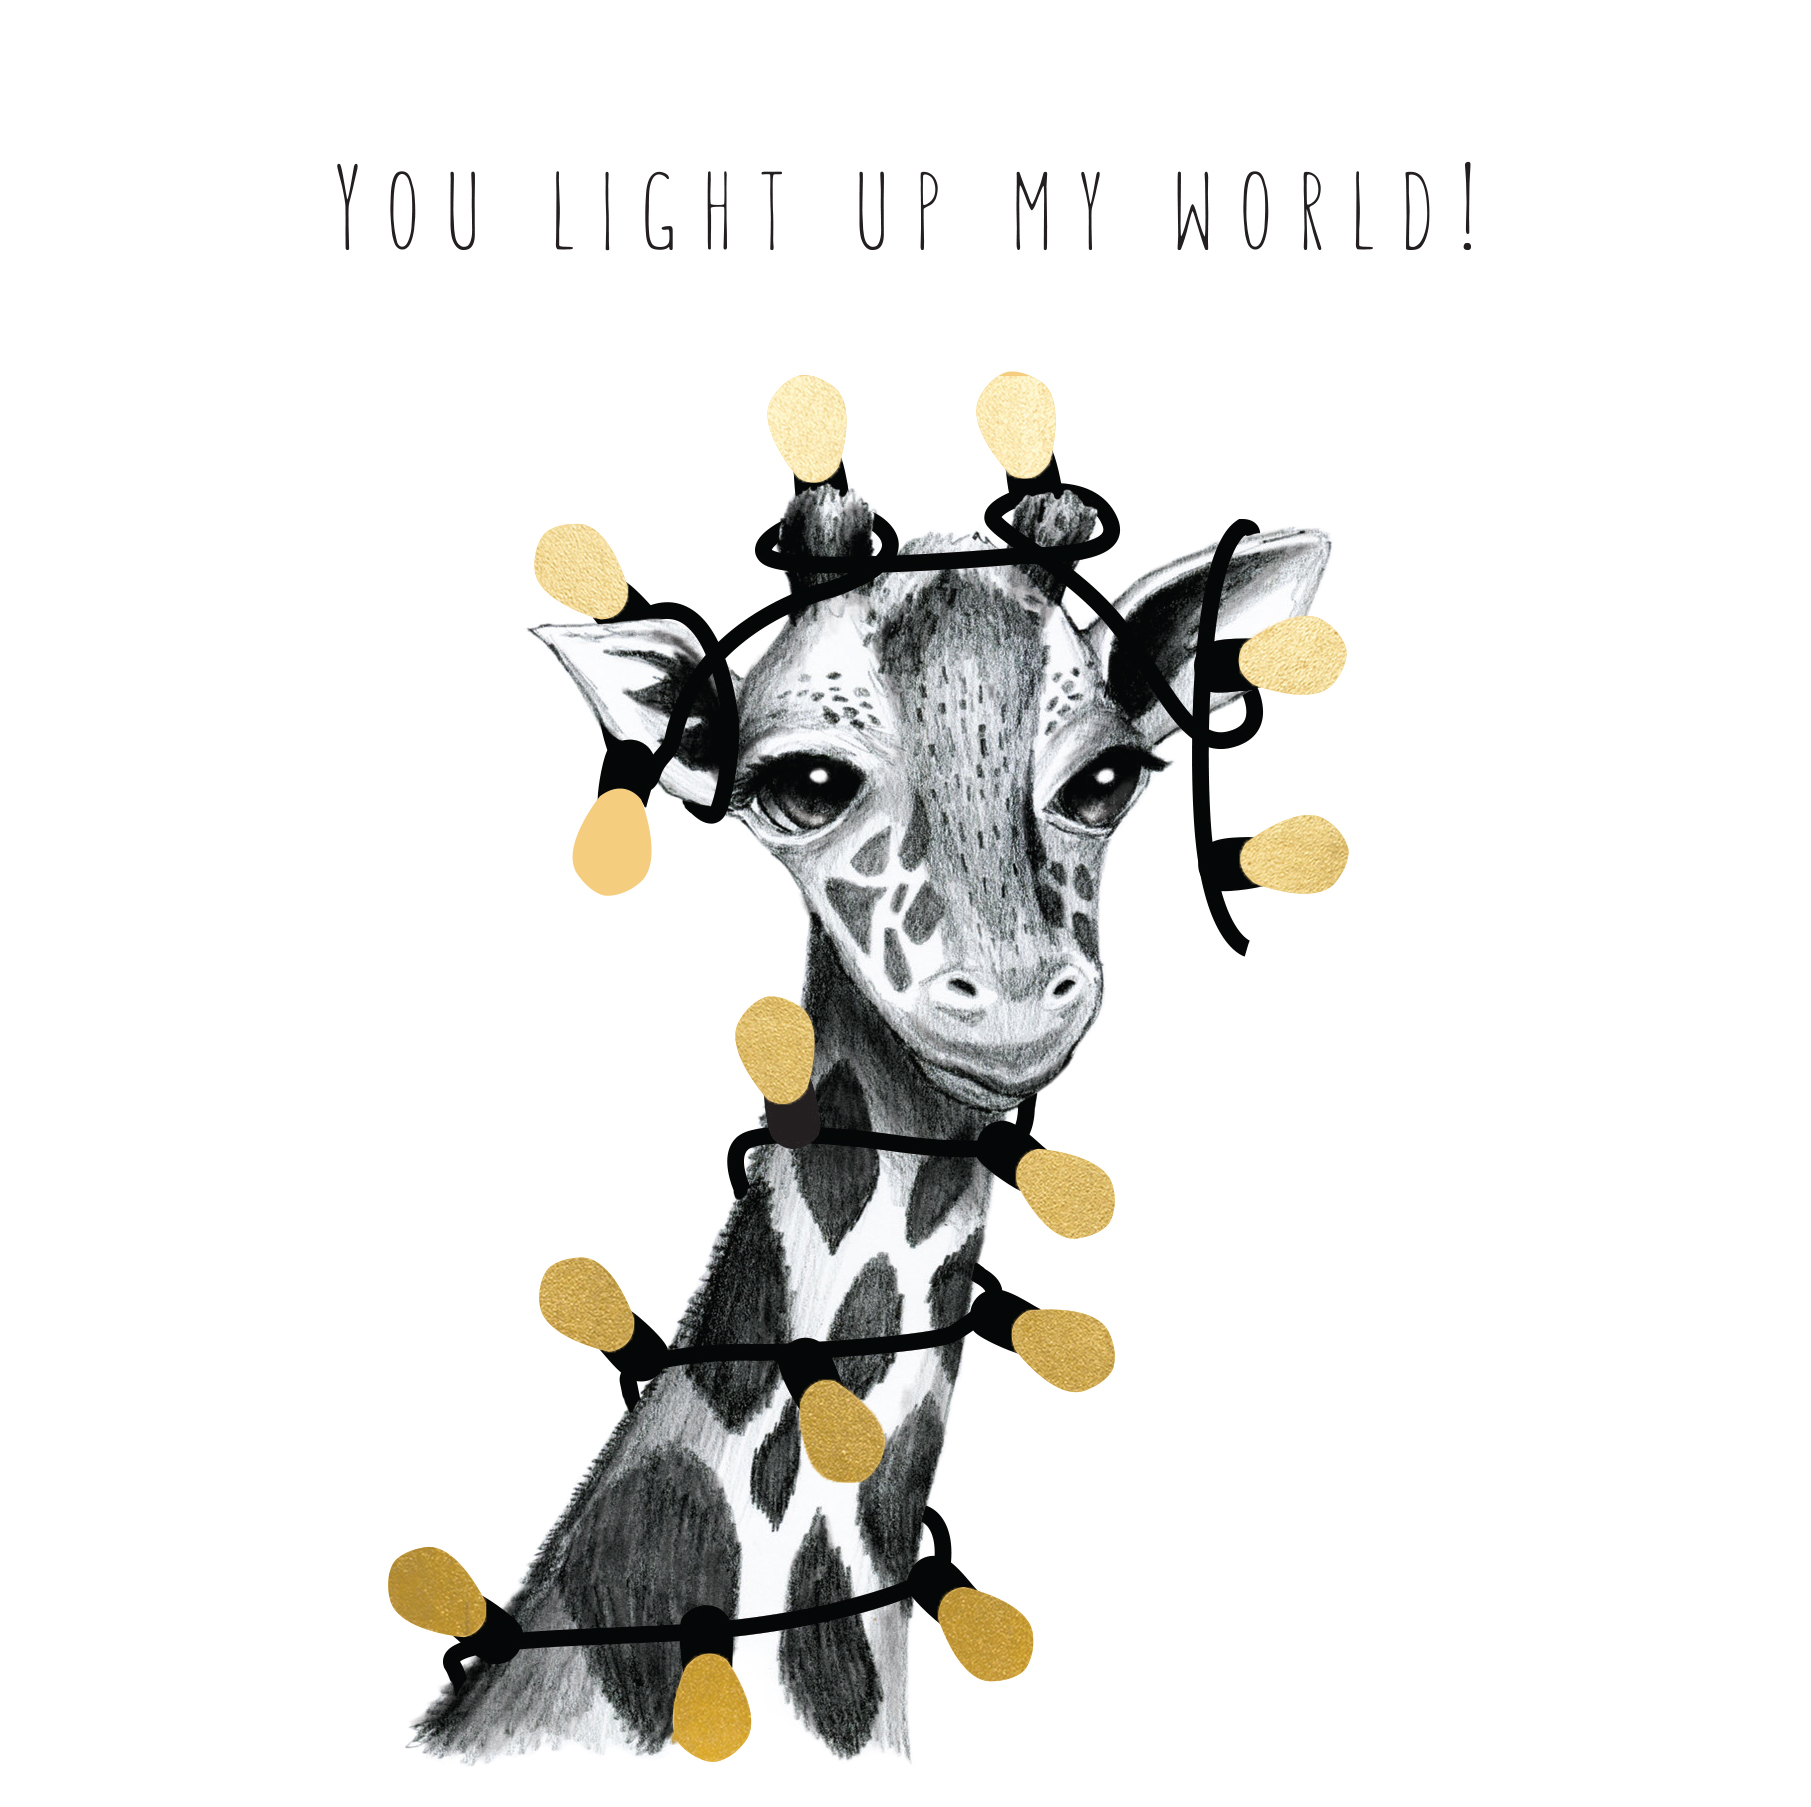 Giraff, Giraffe - You light up my world!